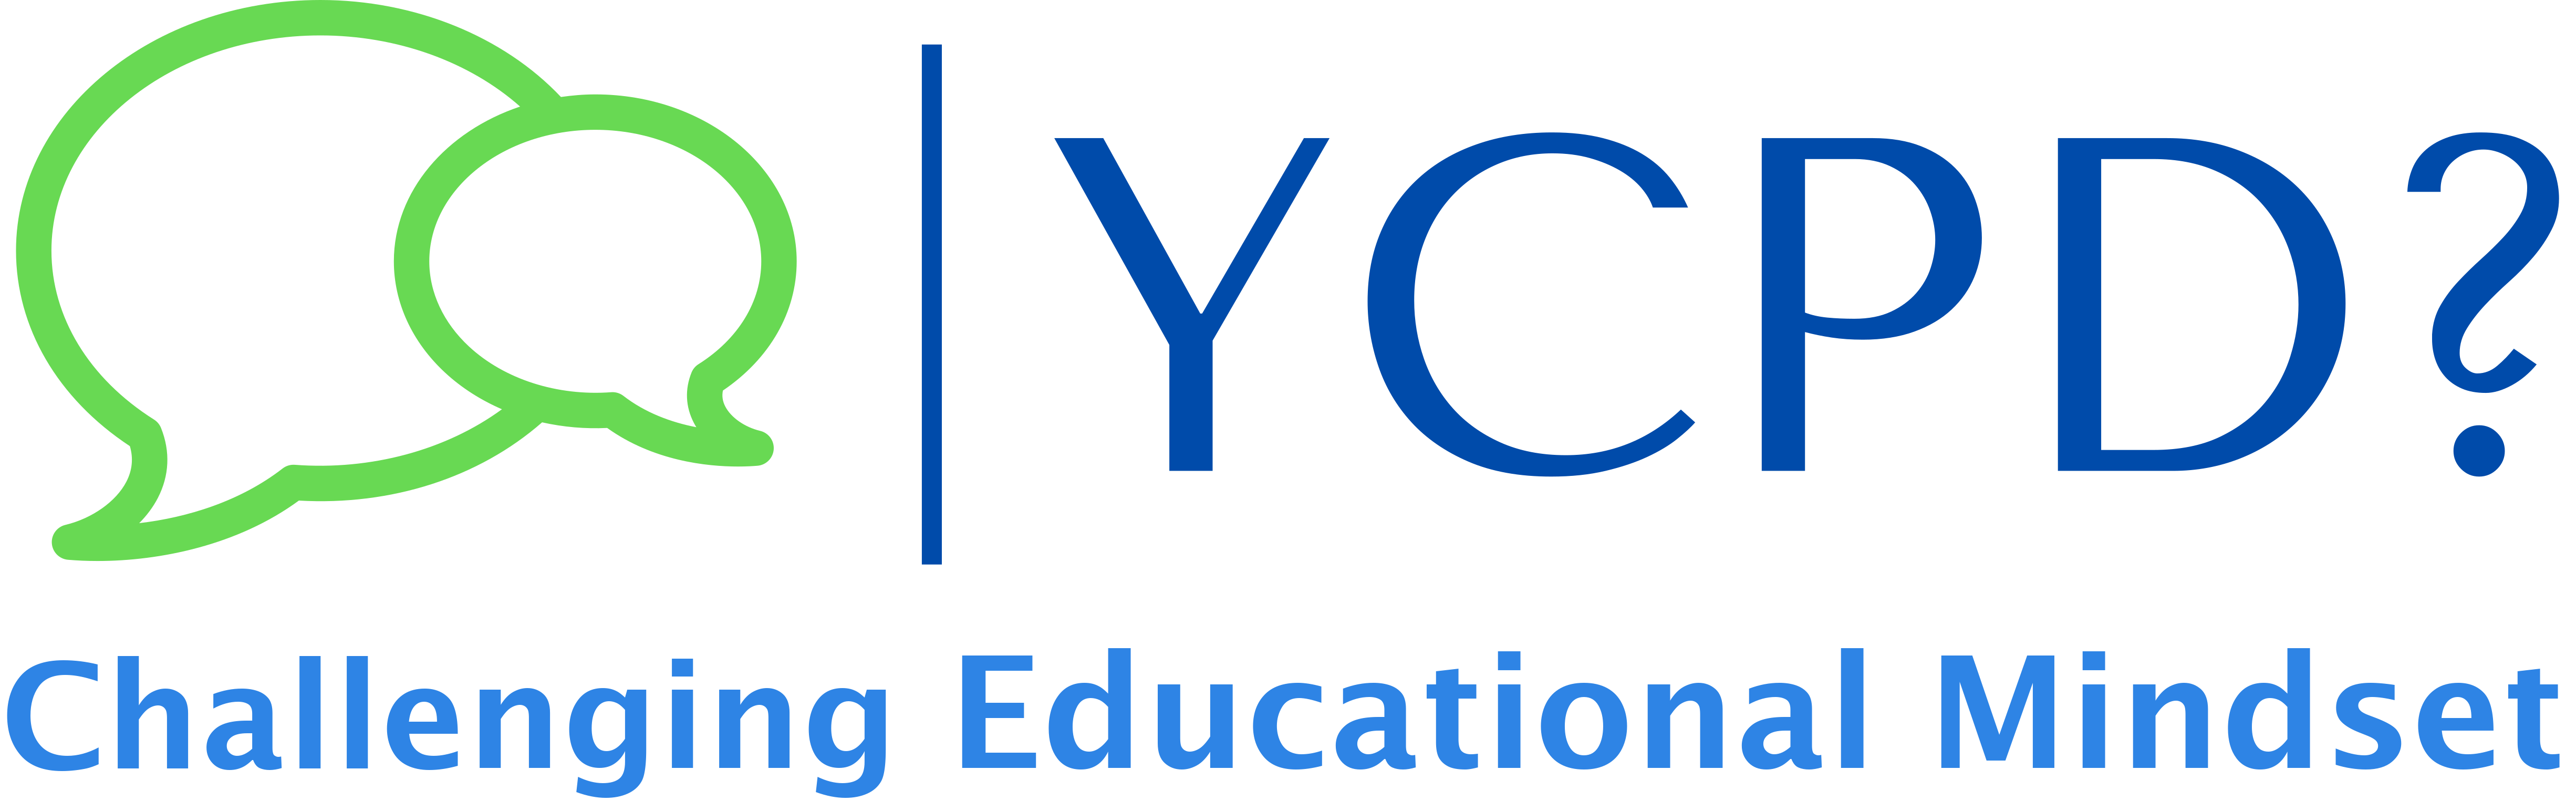 YCPD Logo - Challenging Educational Mindset